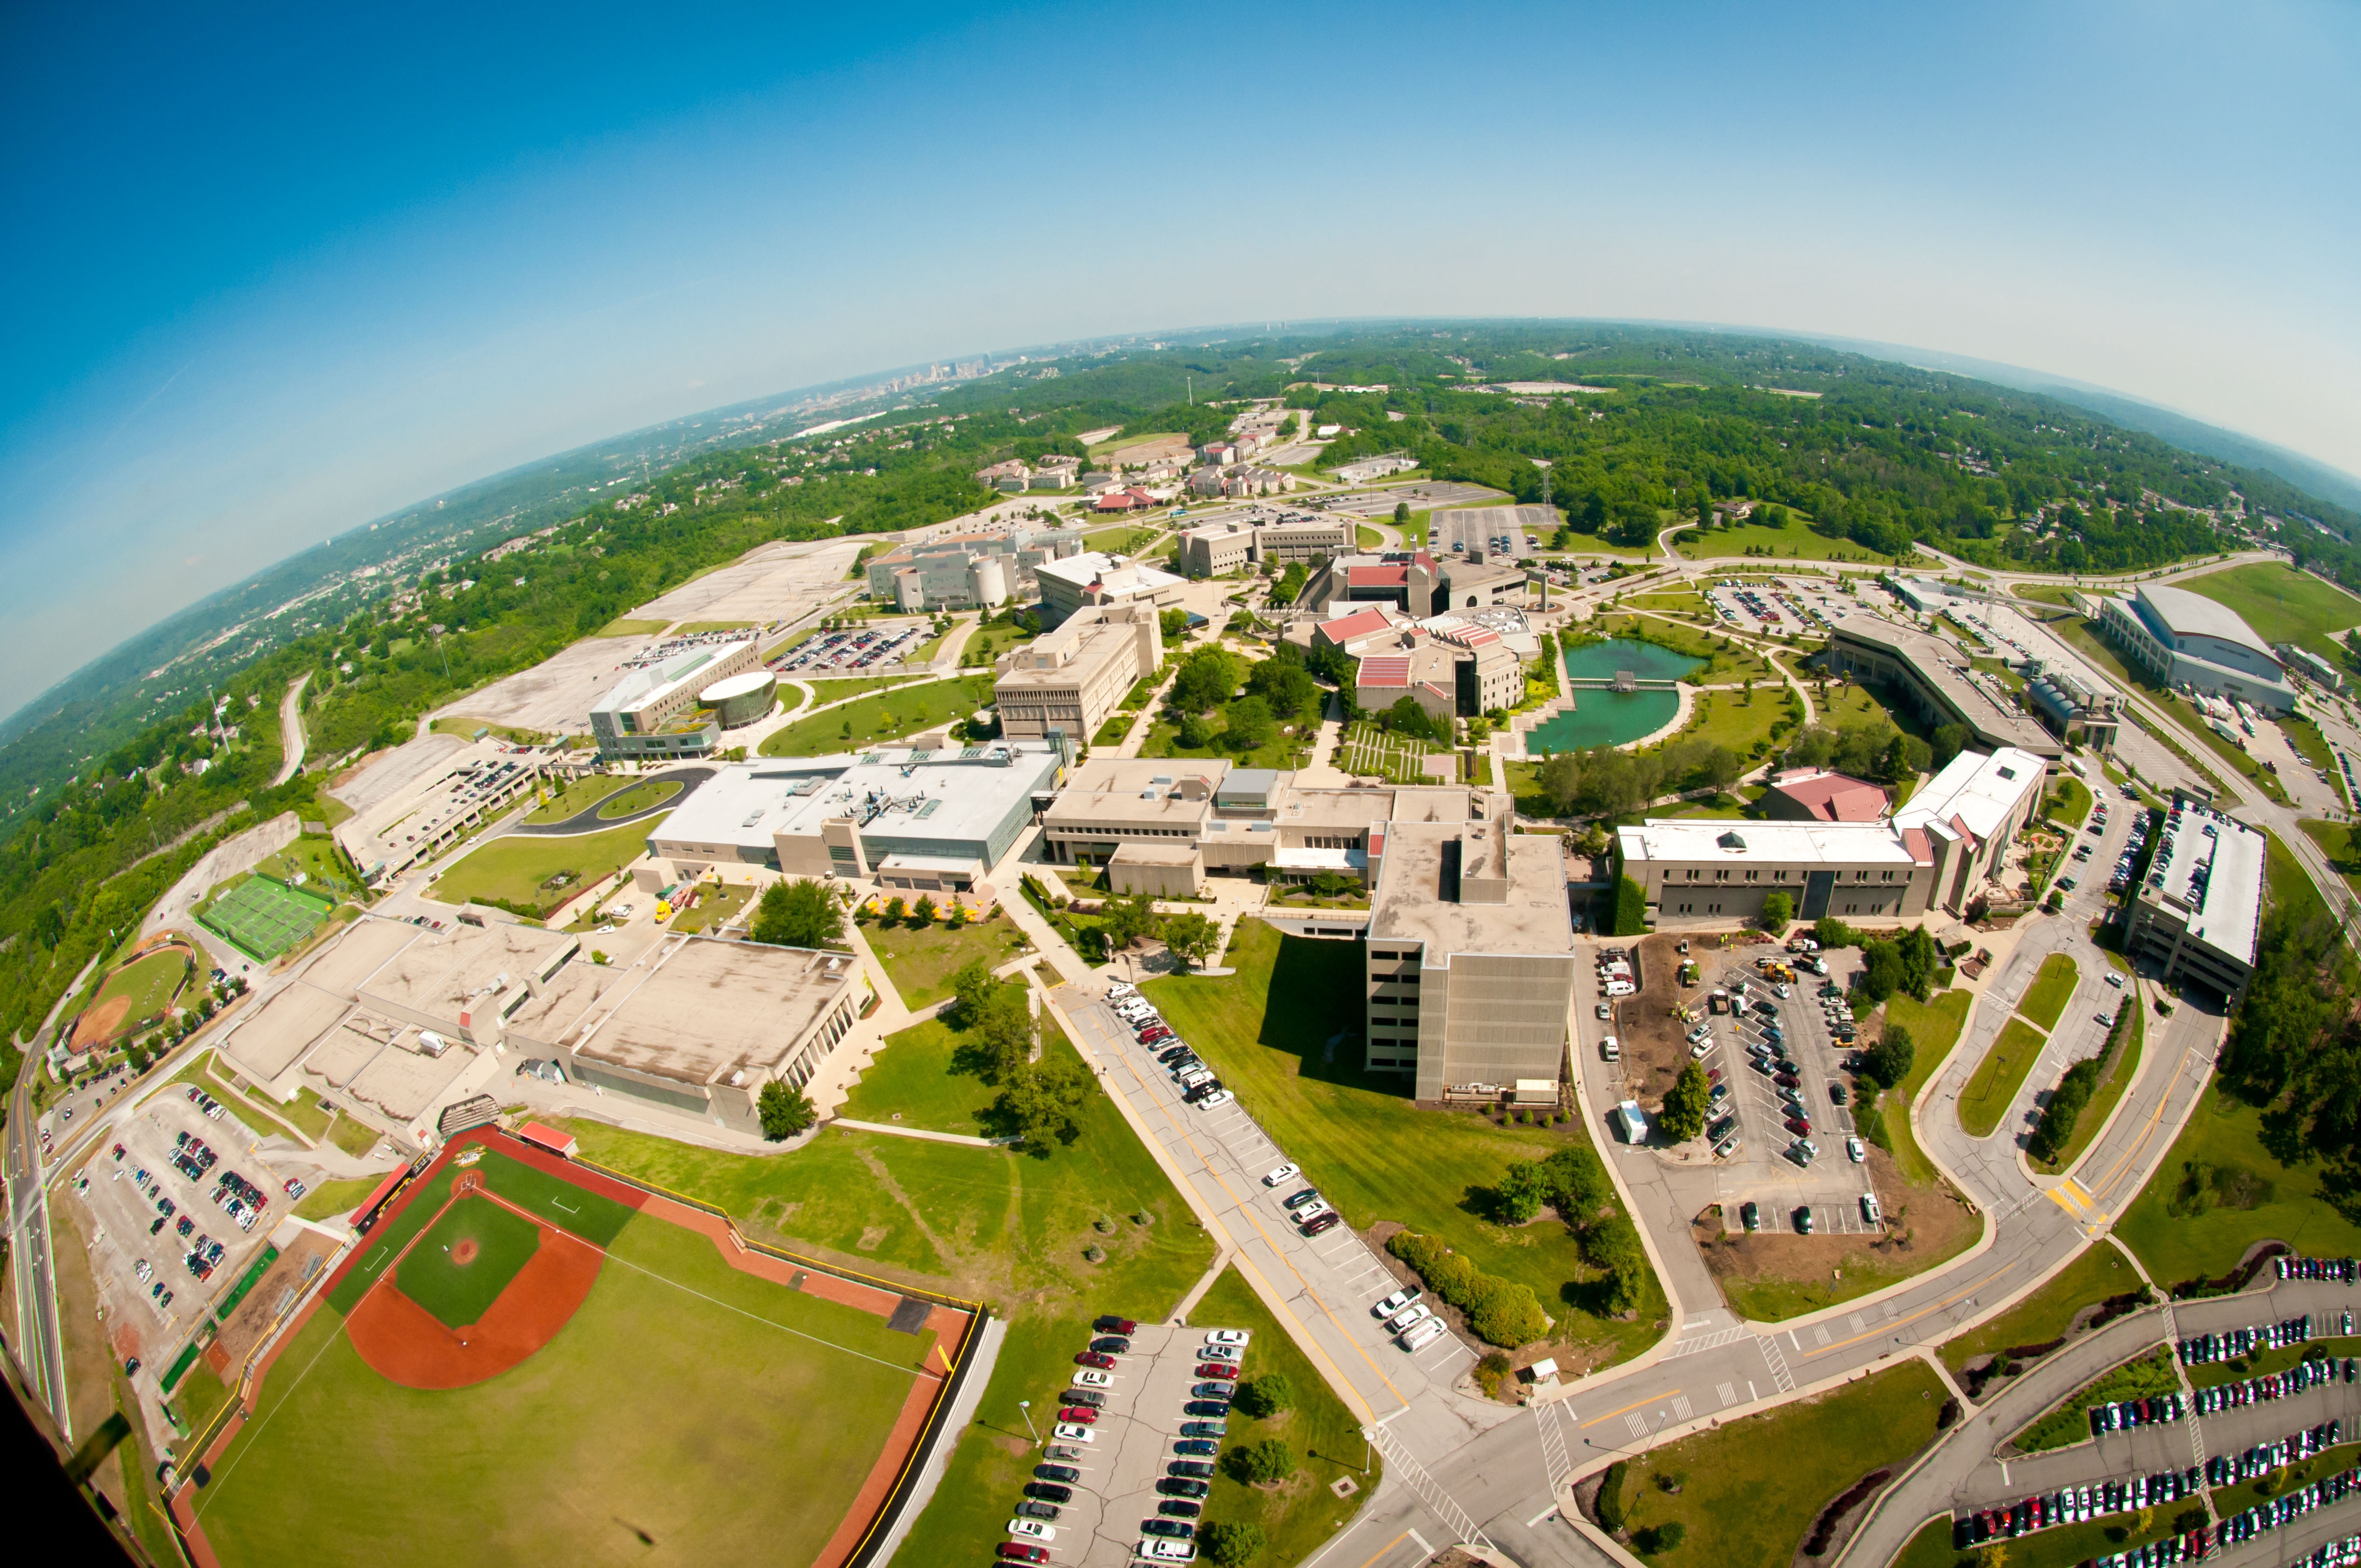 NKU Campus Aerial View